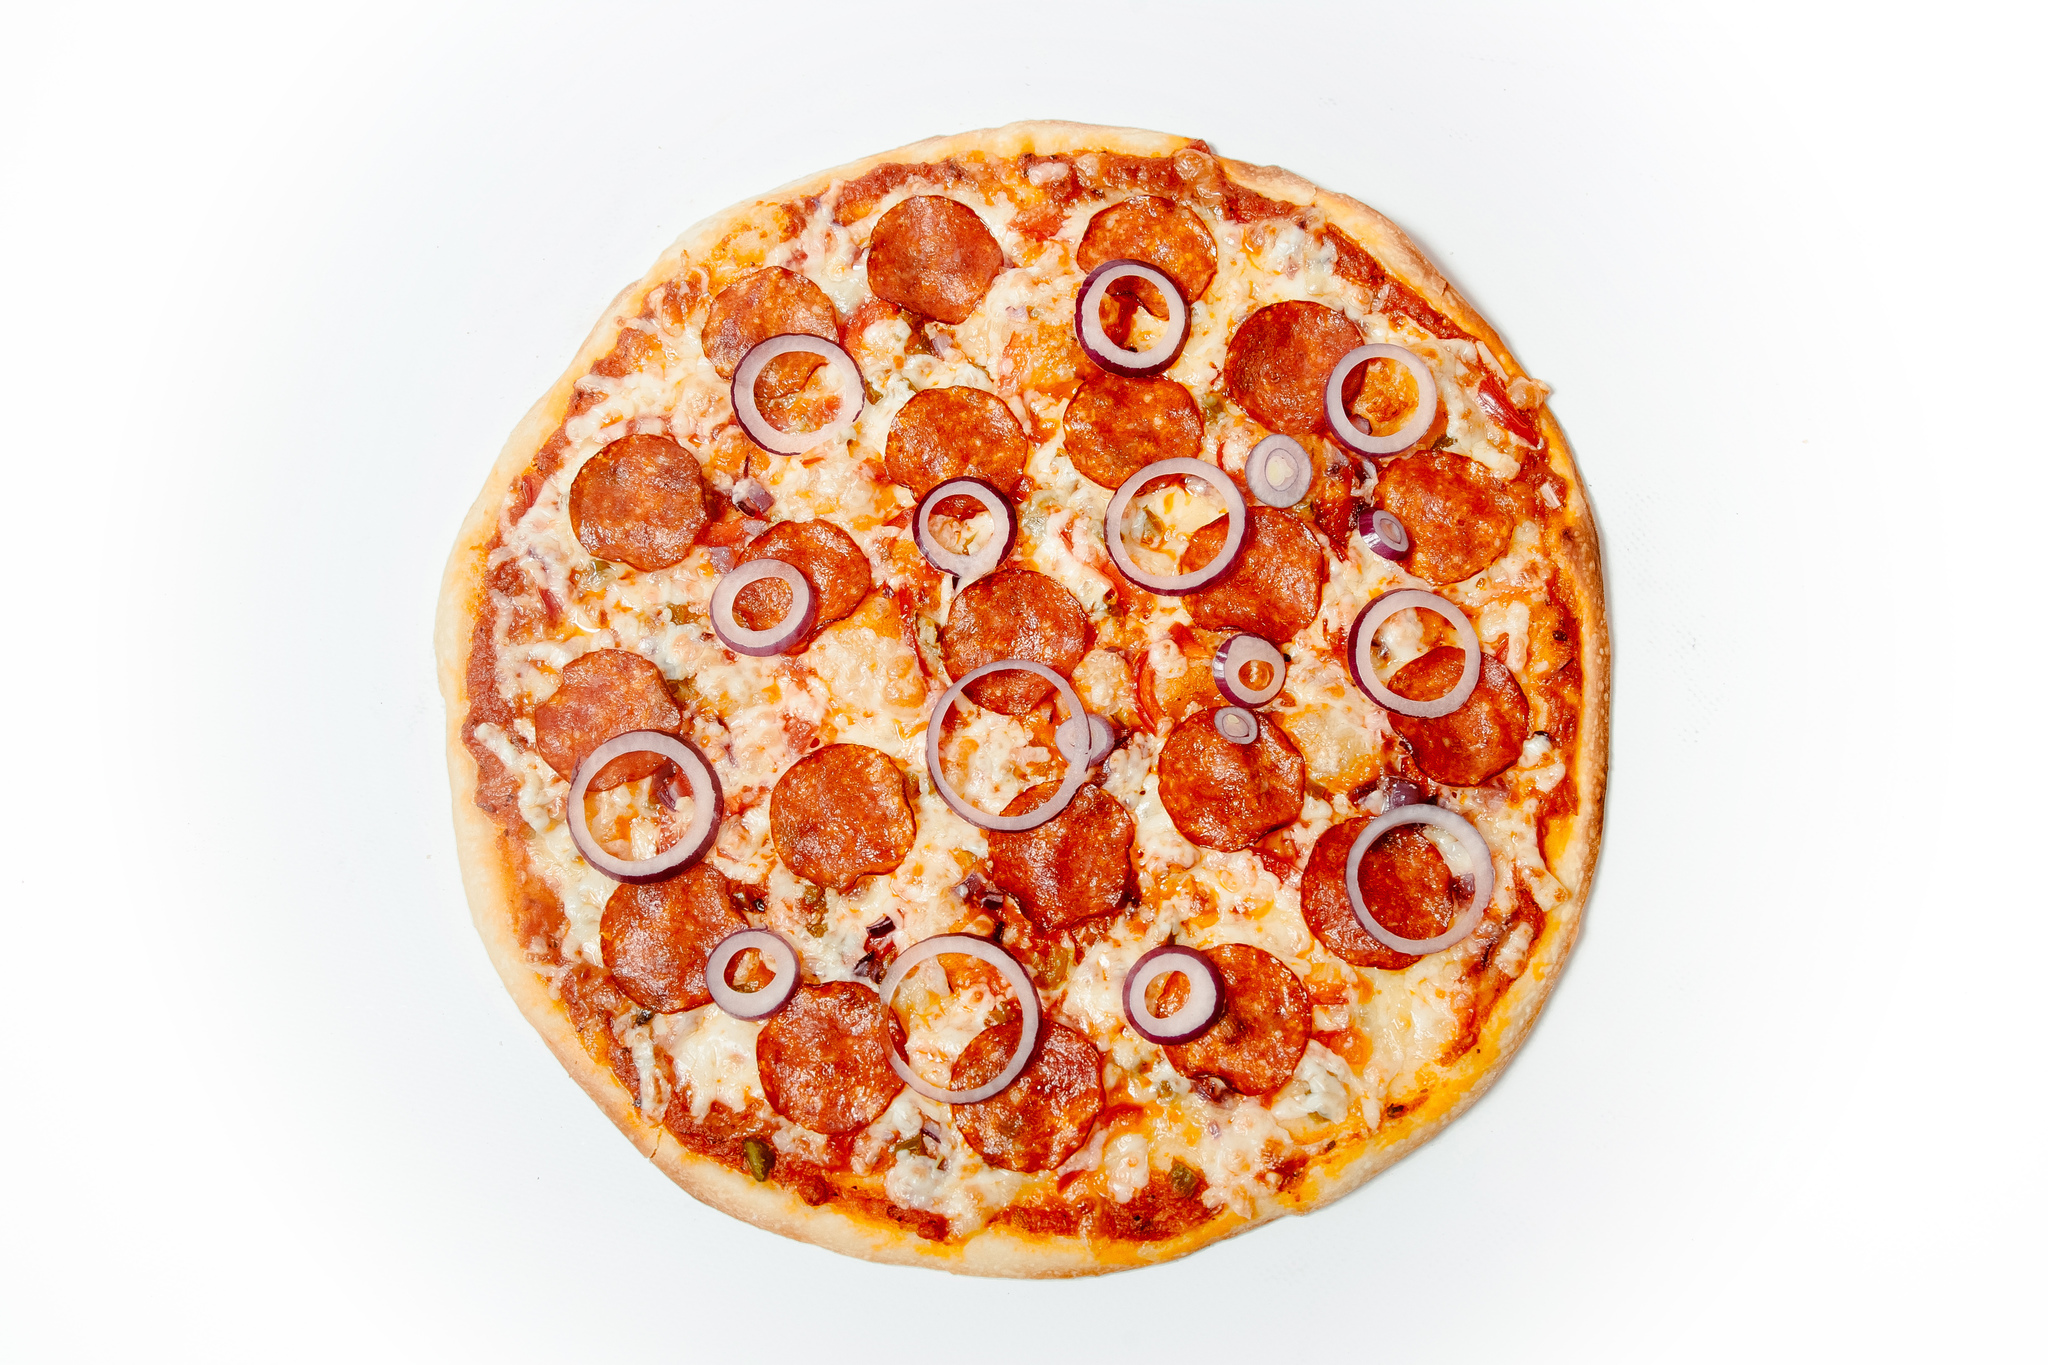 пепперони пицца фото на белом фоне фото 84